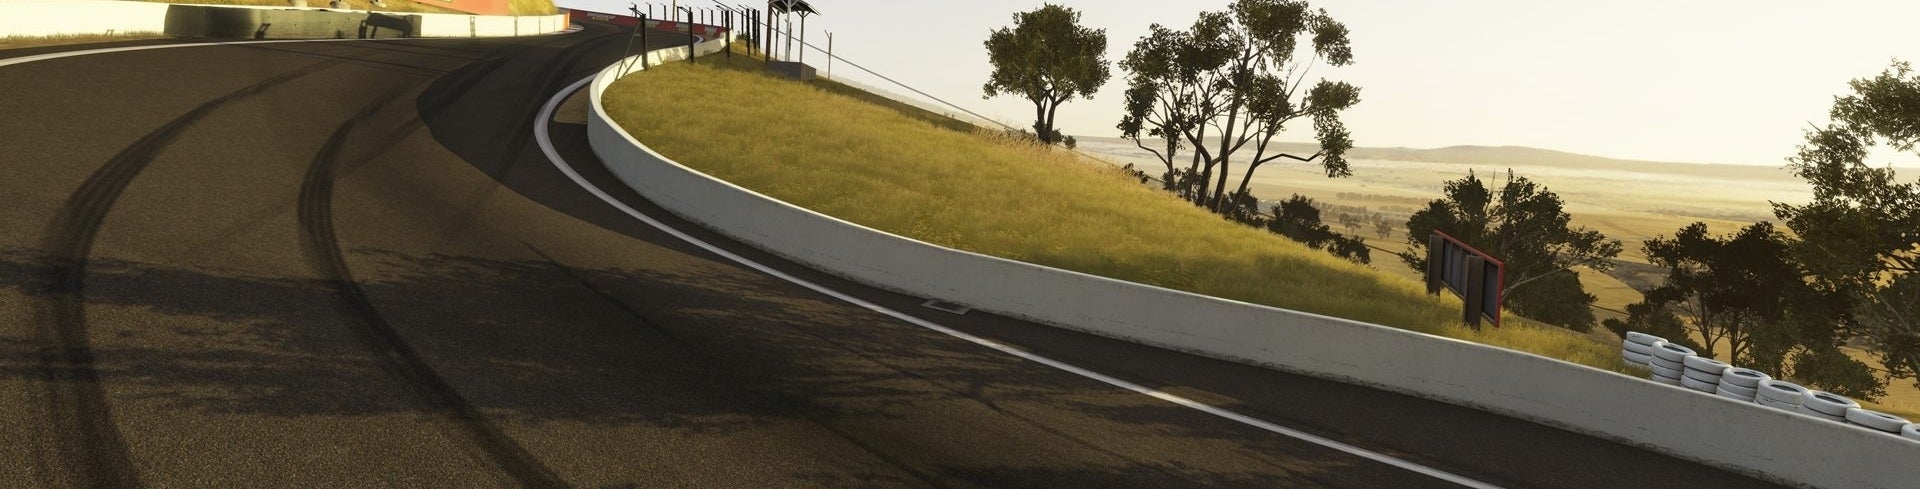 Forza Motorsport 5评论图片